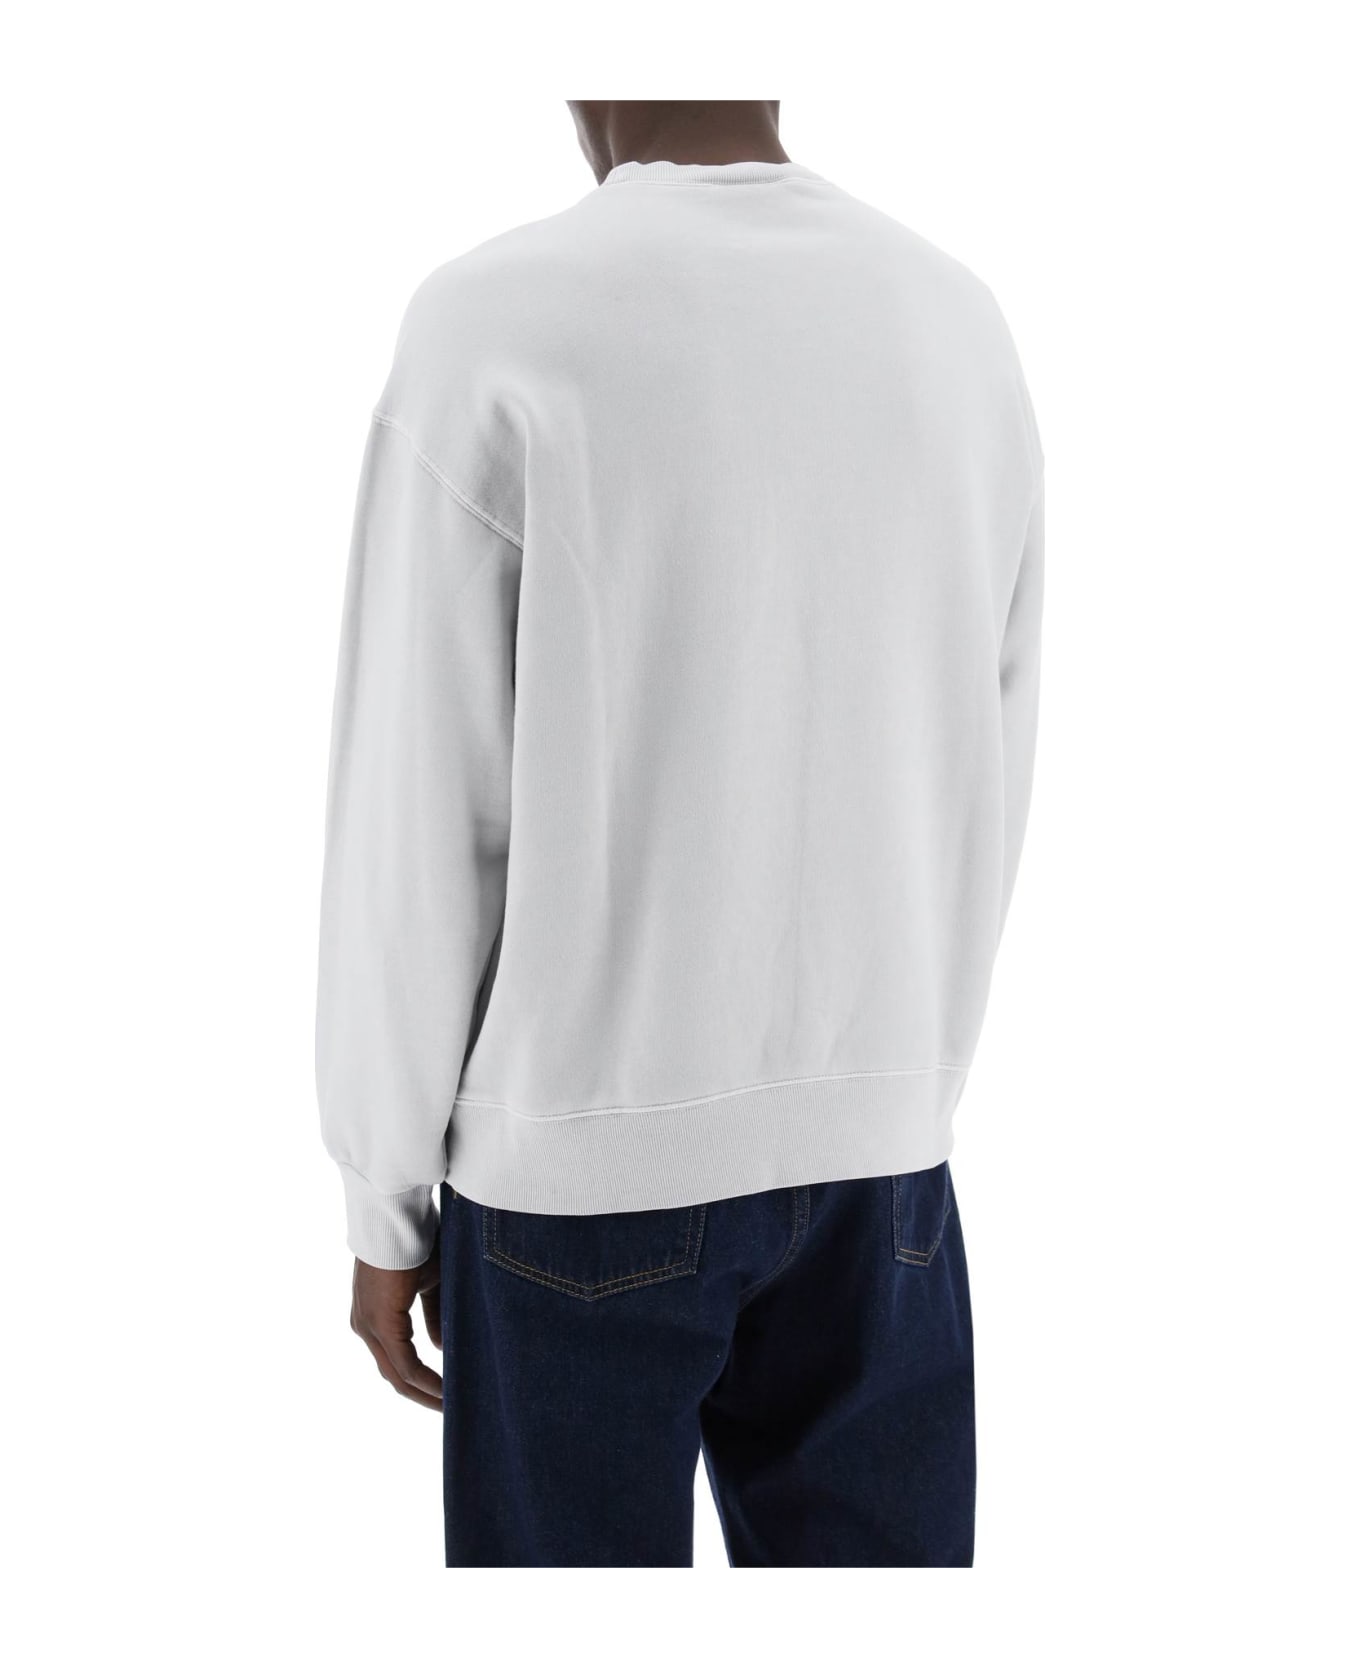 Carhartt Nelson Crew-neck Sweatshirt - Ye.gd Sonic Silver Garment Dyed